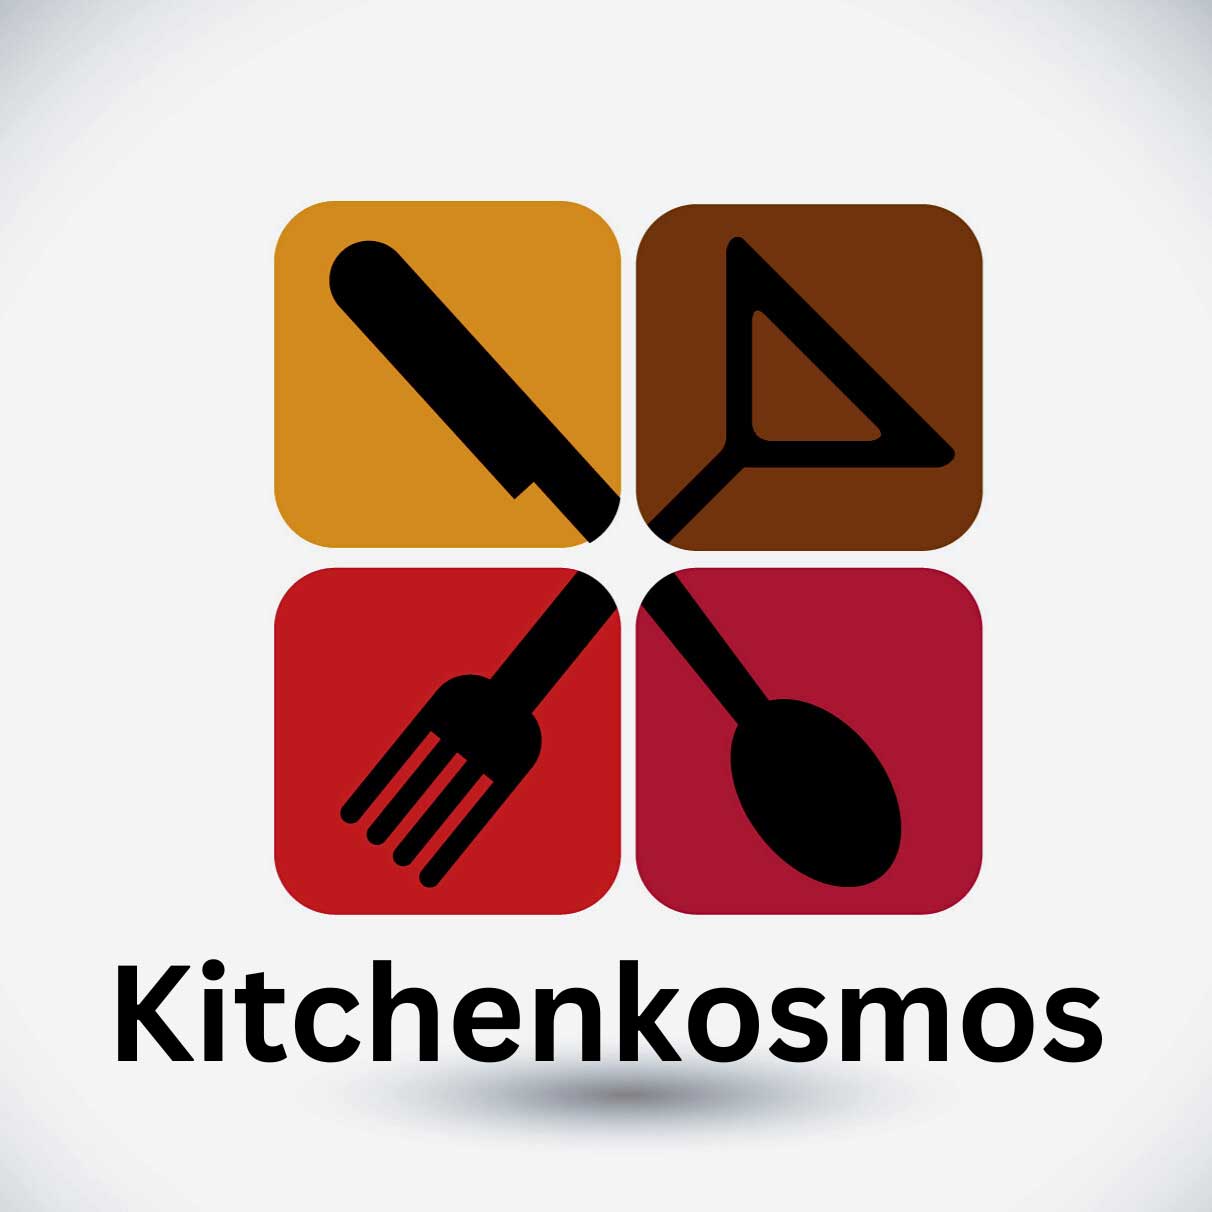 Company logo of Kitchenkosmos